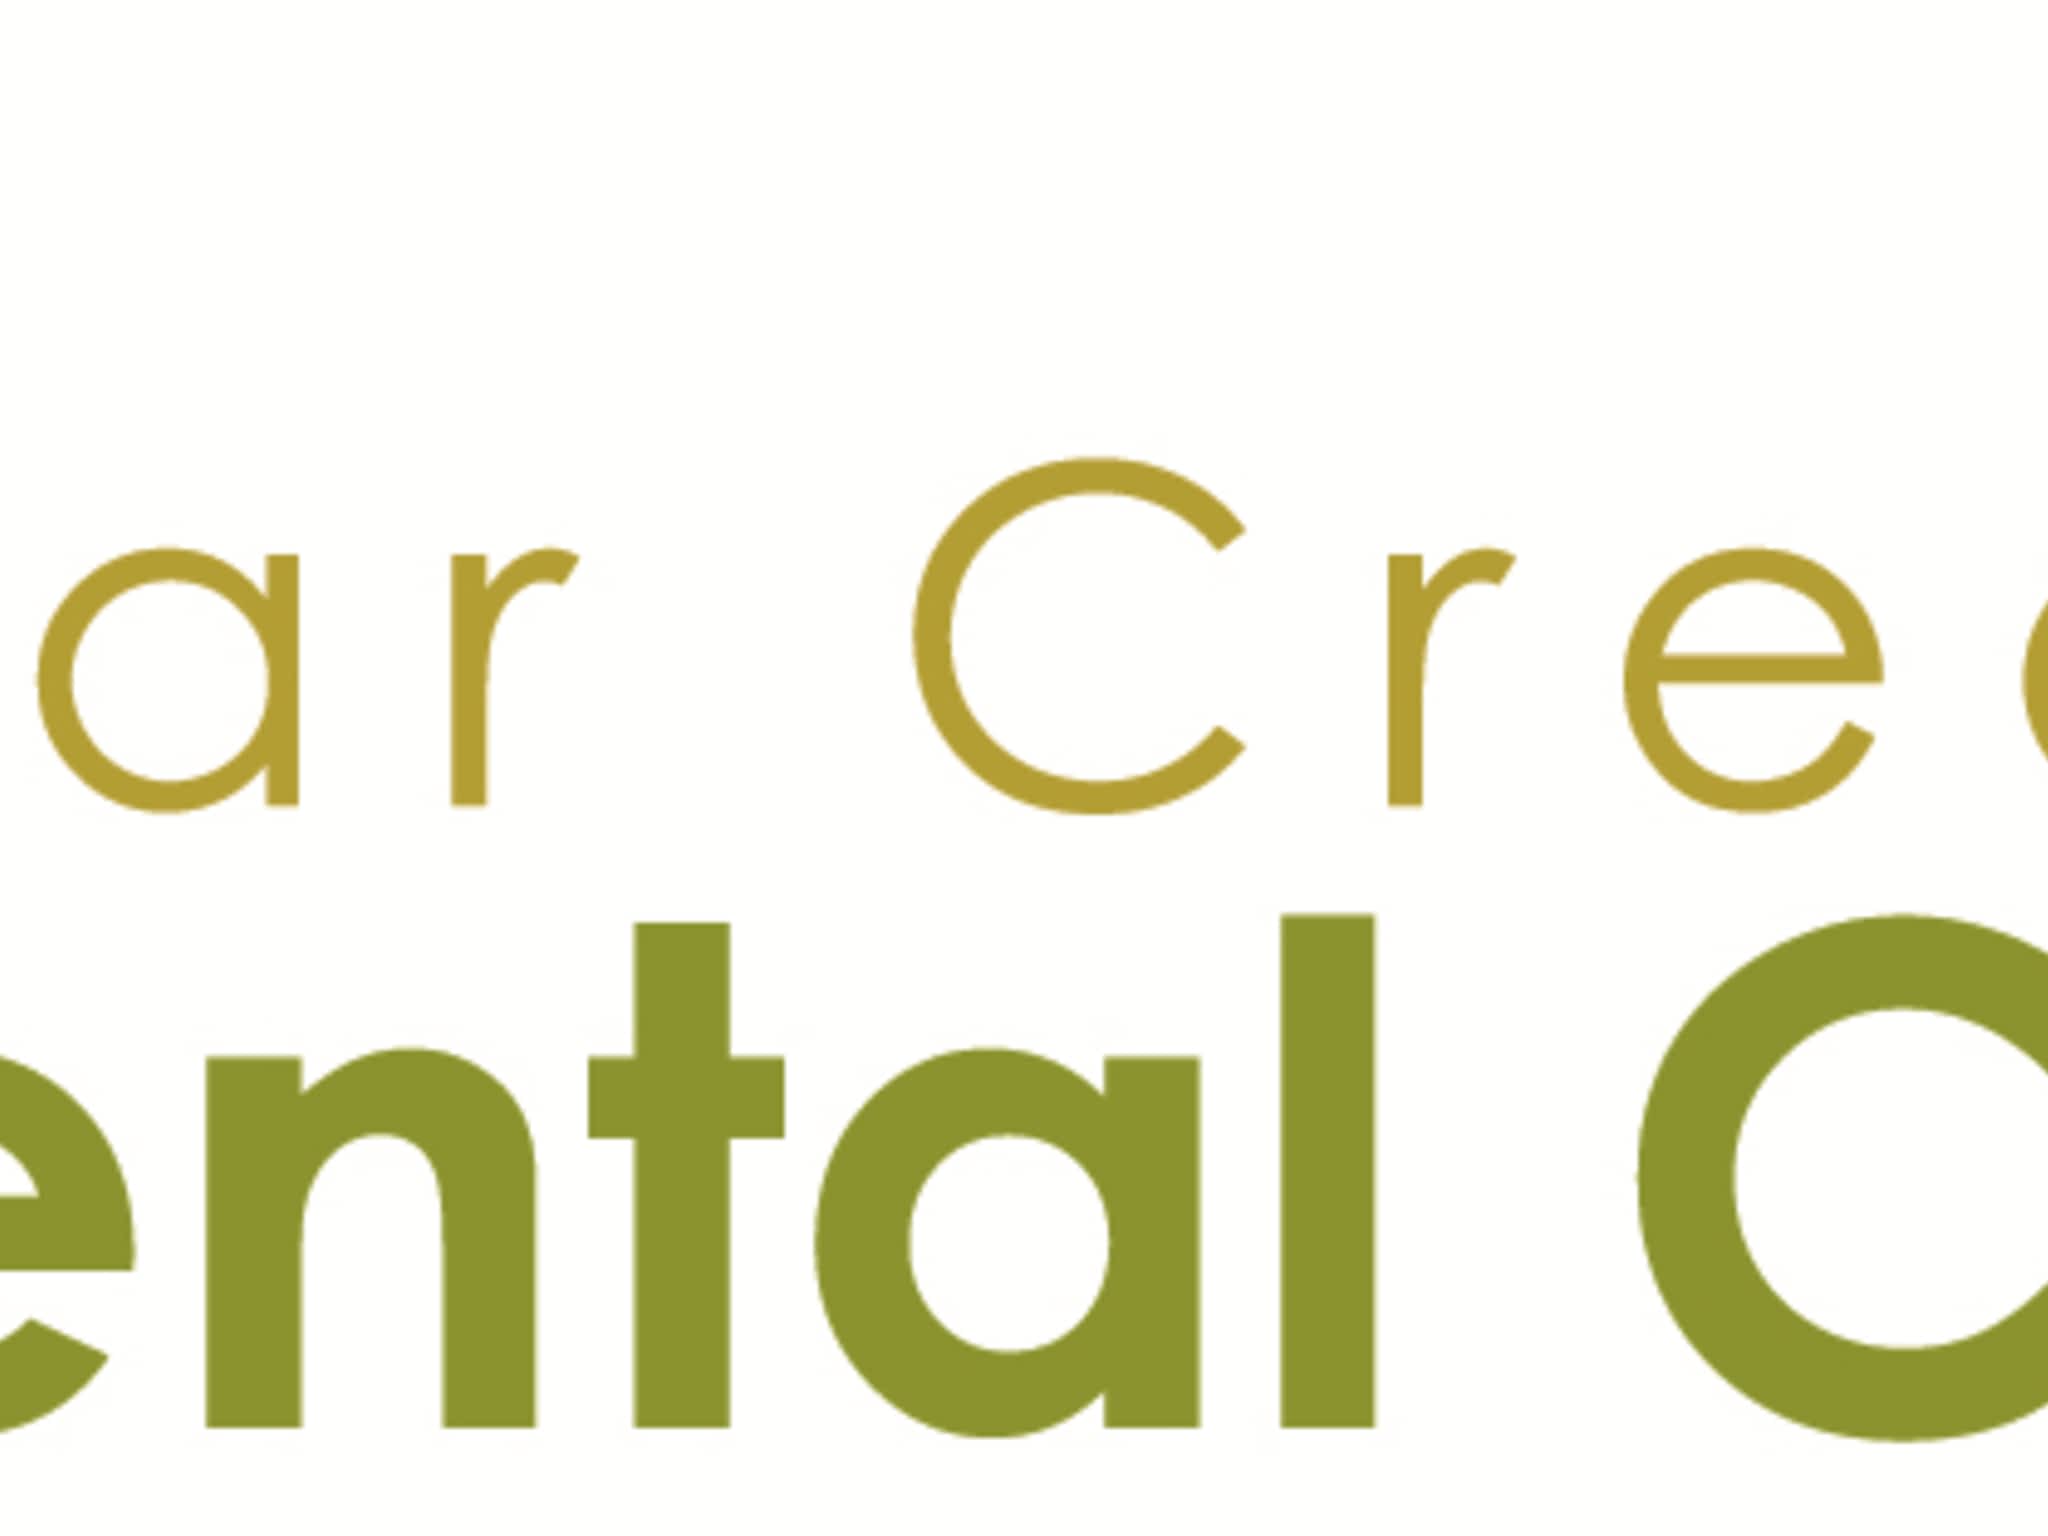 photo Bear Creek Dental Clinic